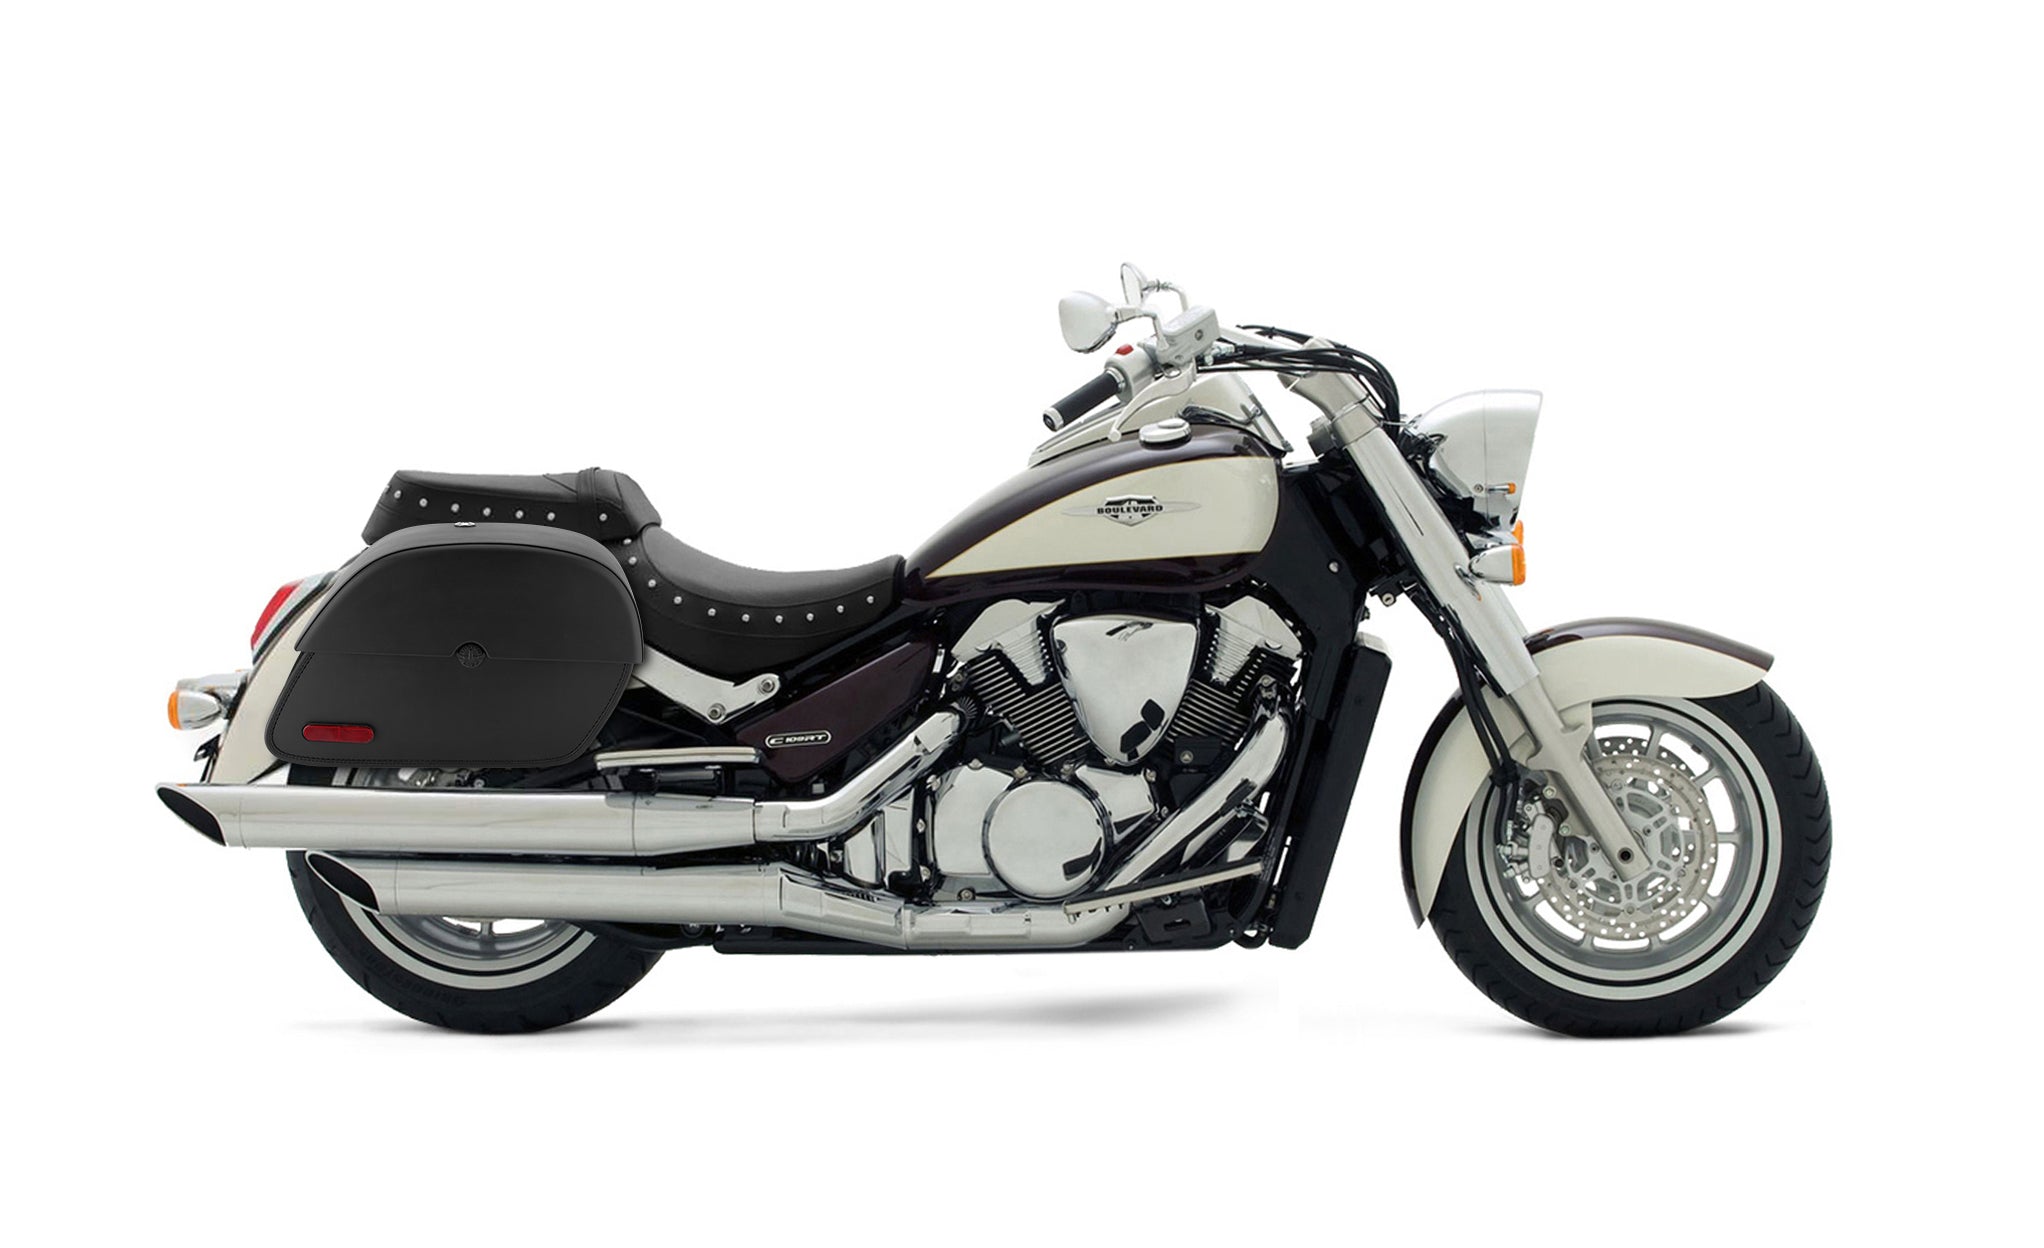 Viking Panzer Medium Suzuki Boulevard C109 Leather Motorcycle Saddlebags Engineering Excellence with Bag on Bike @expand